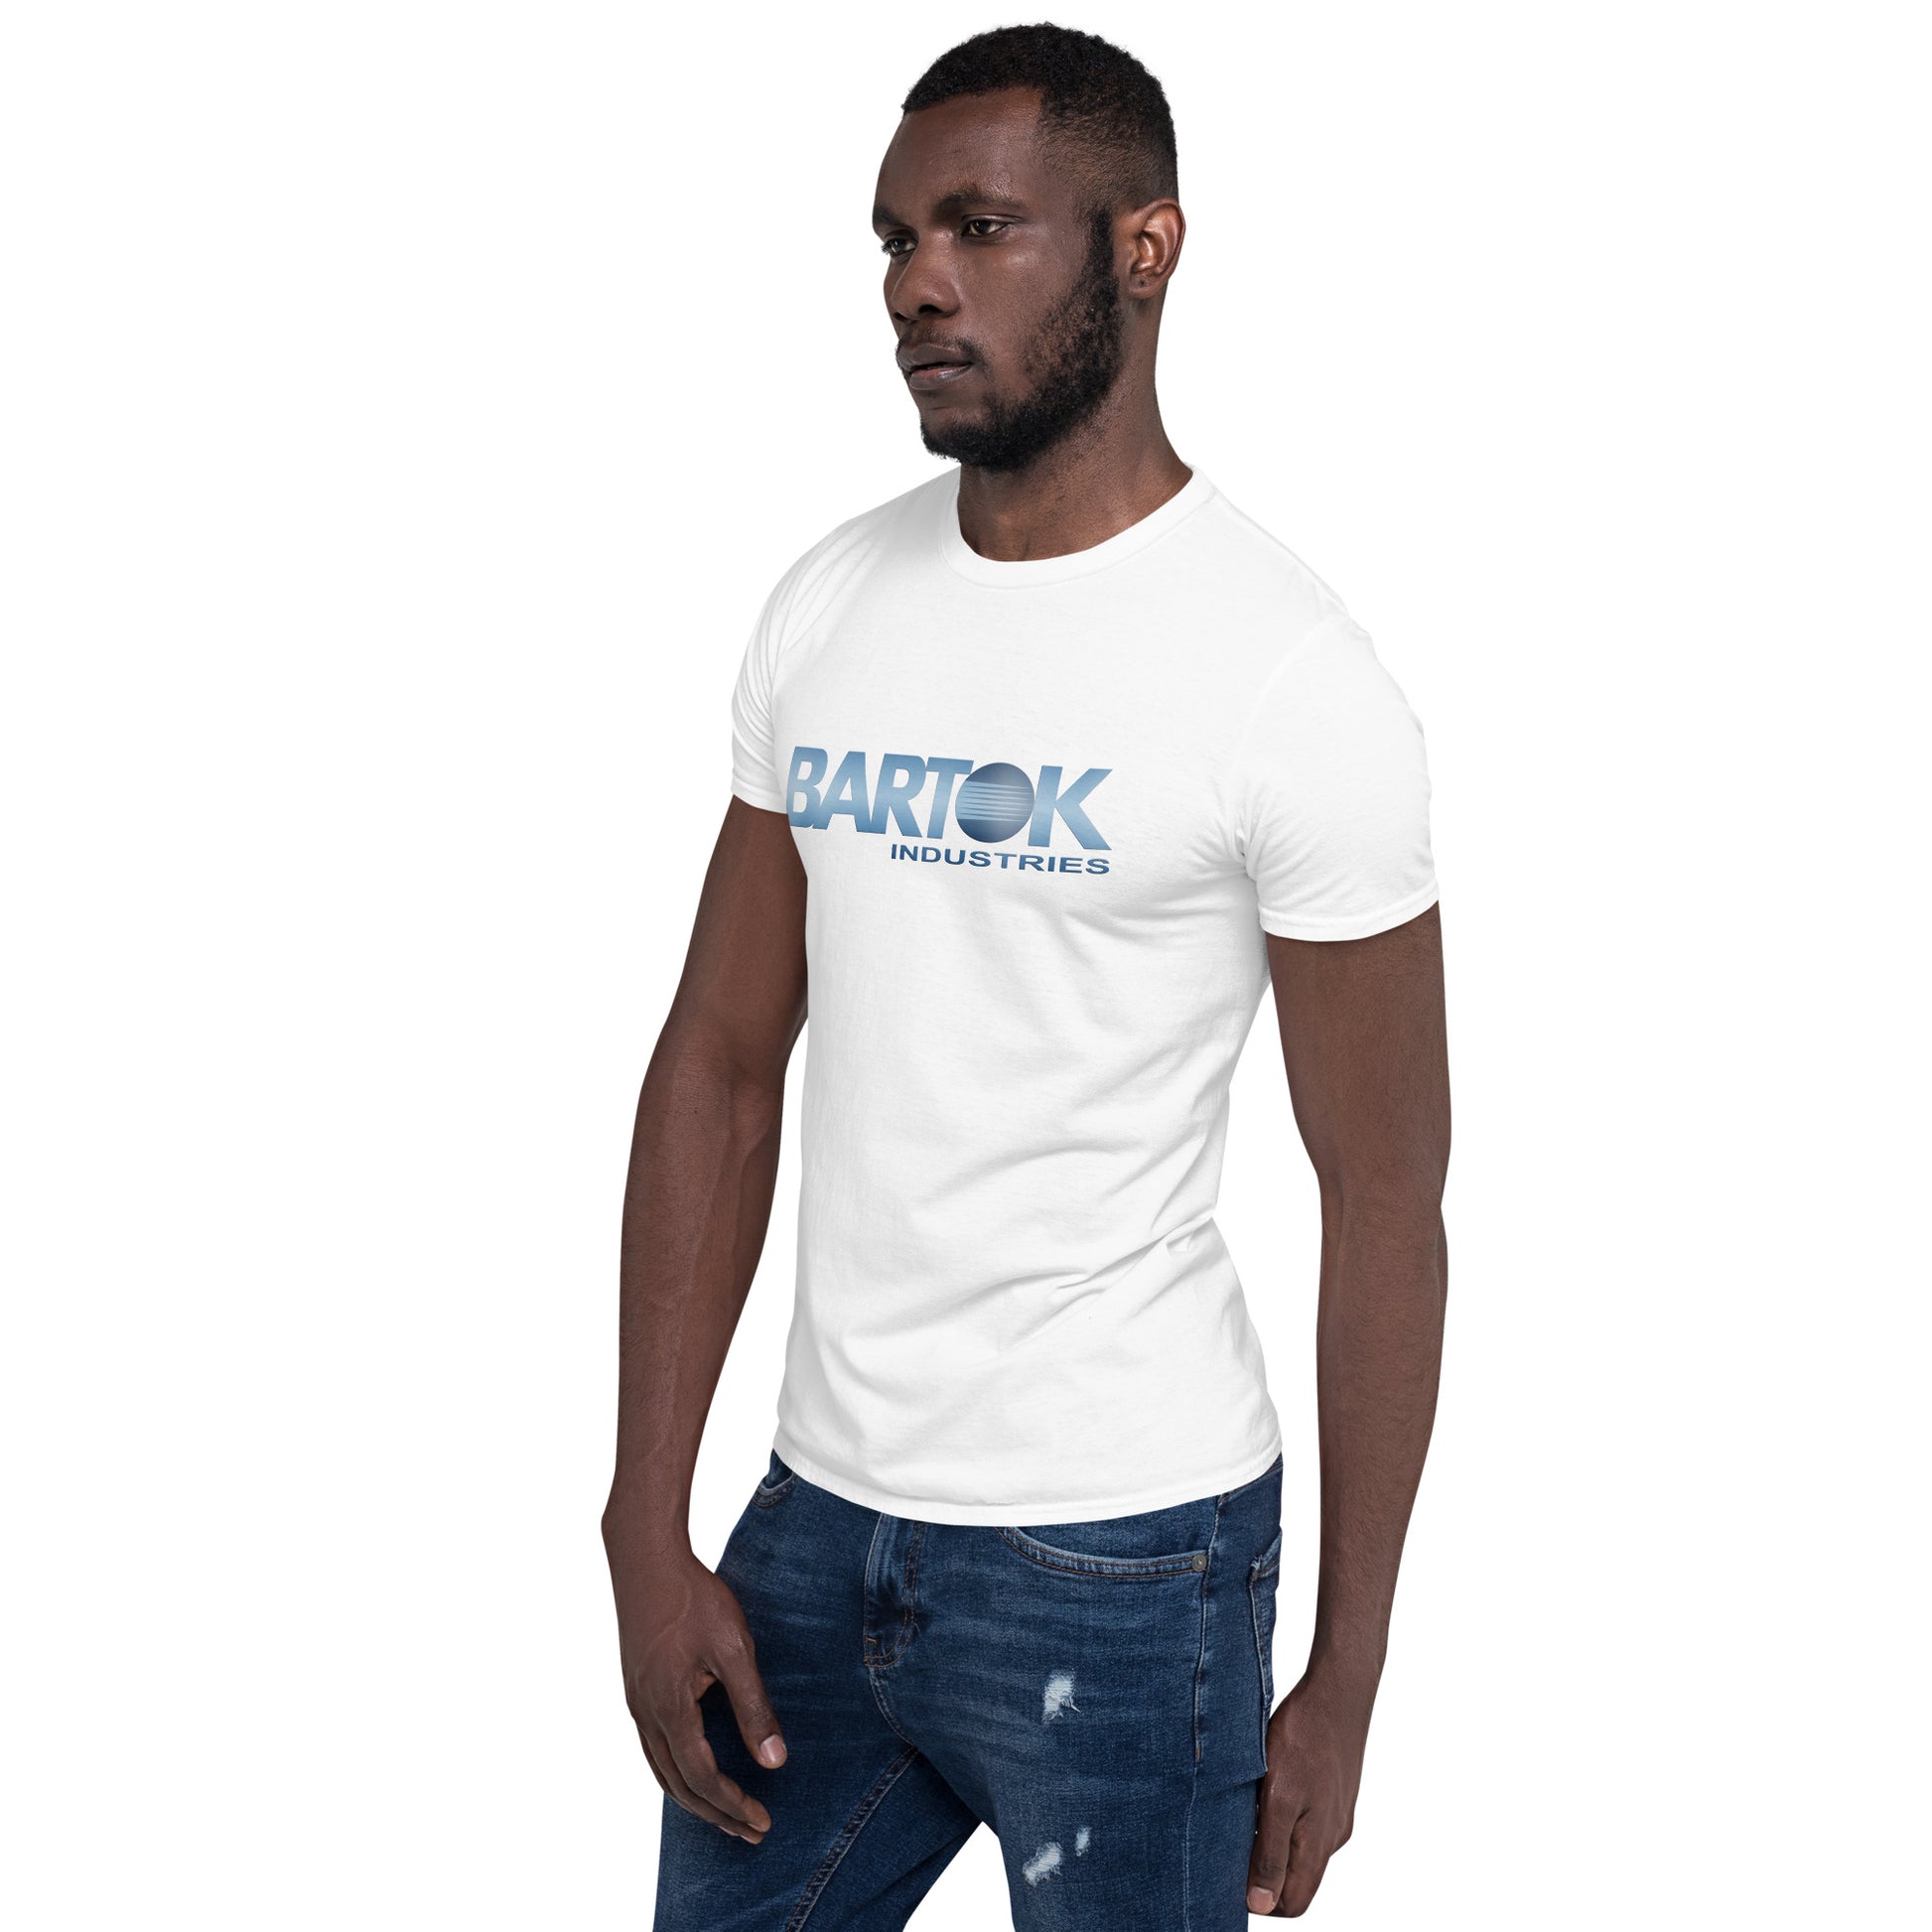 Bartok Industries Short-sleeve Unisex T-shirt White Mockup